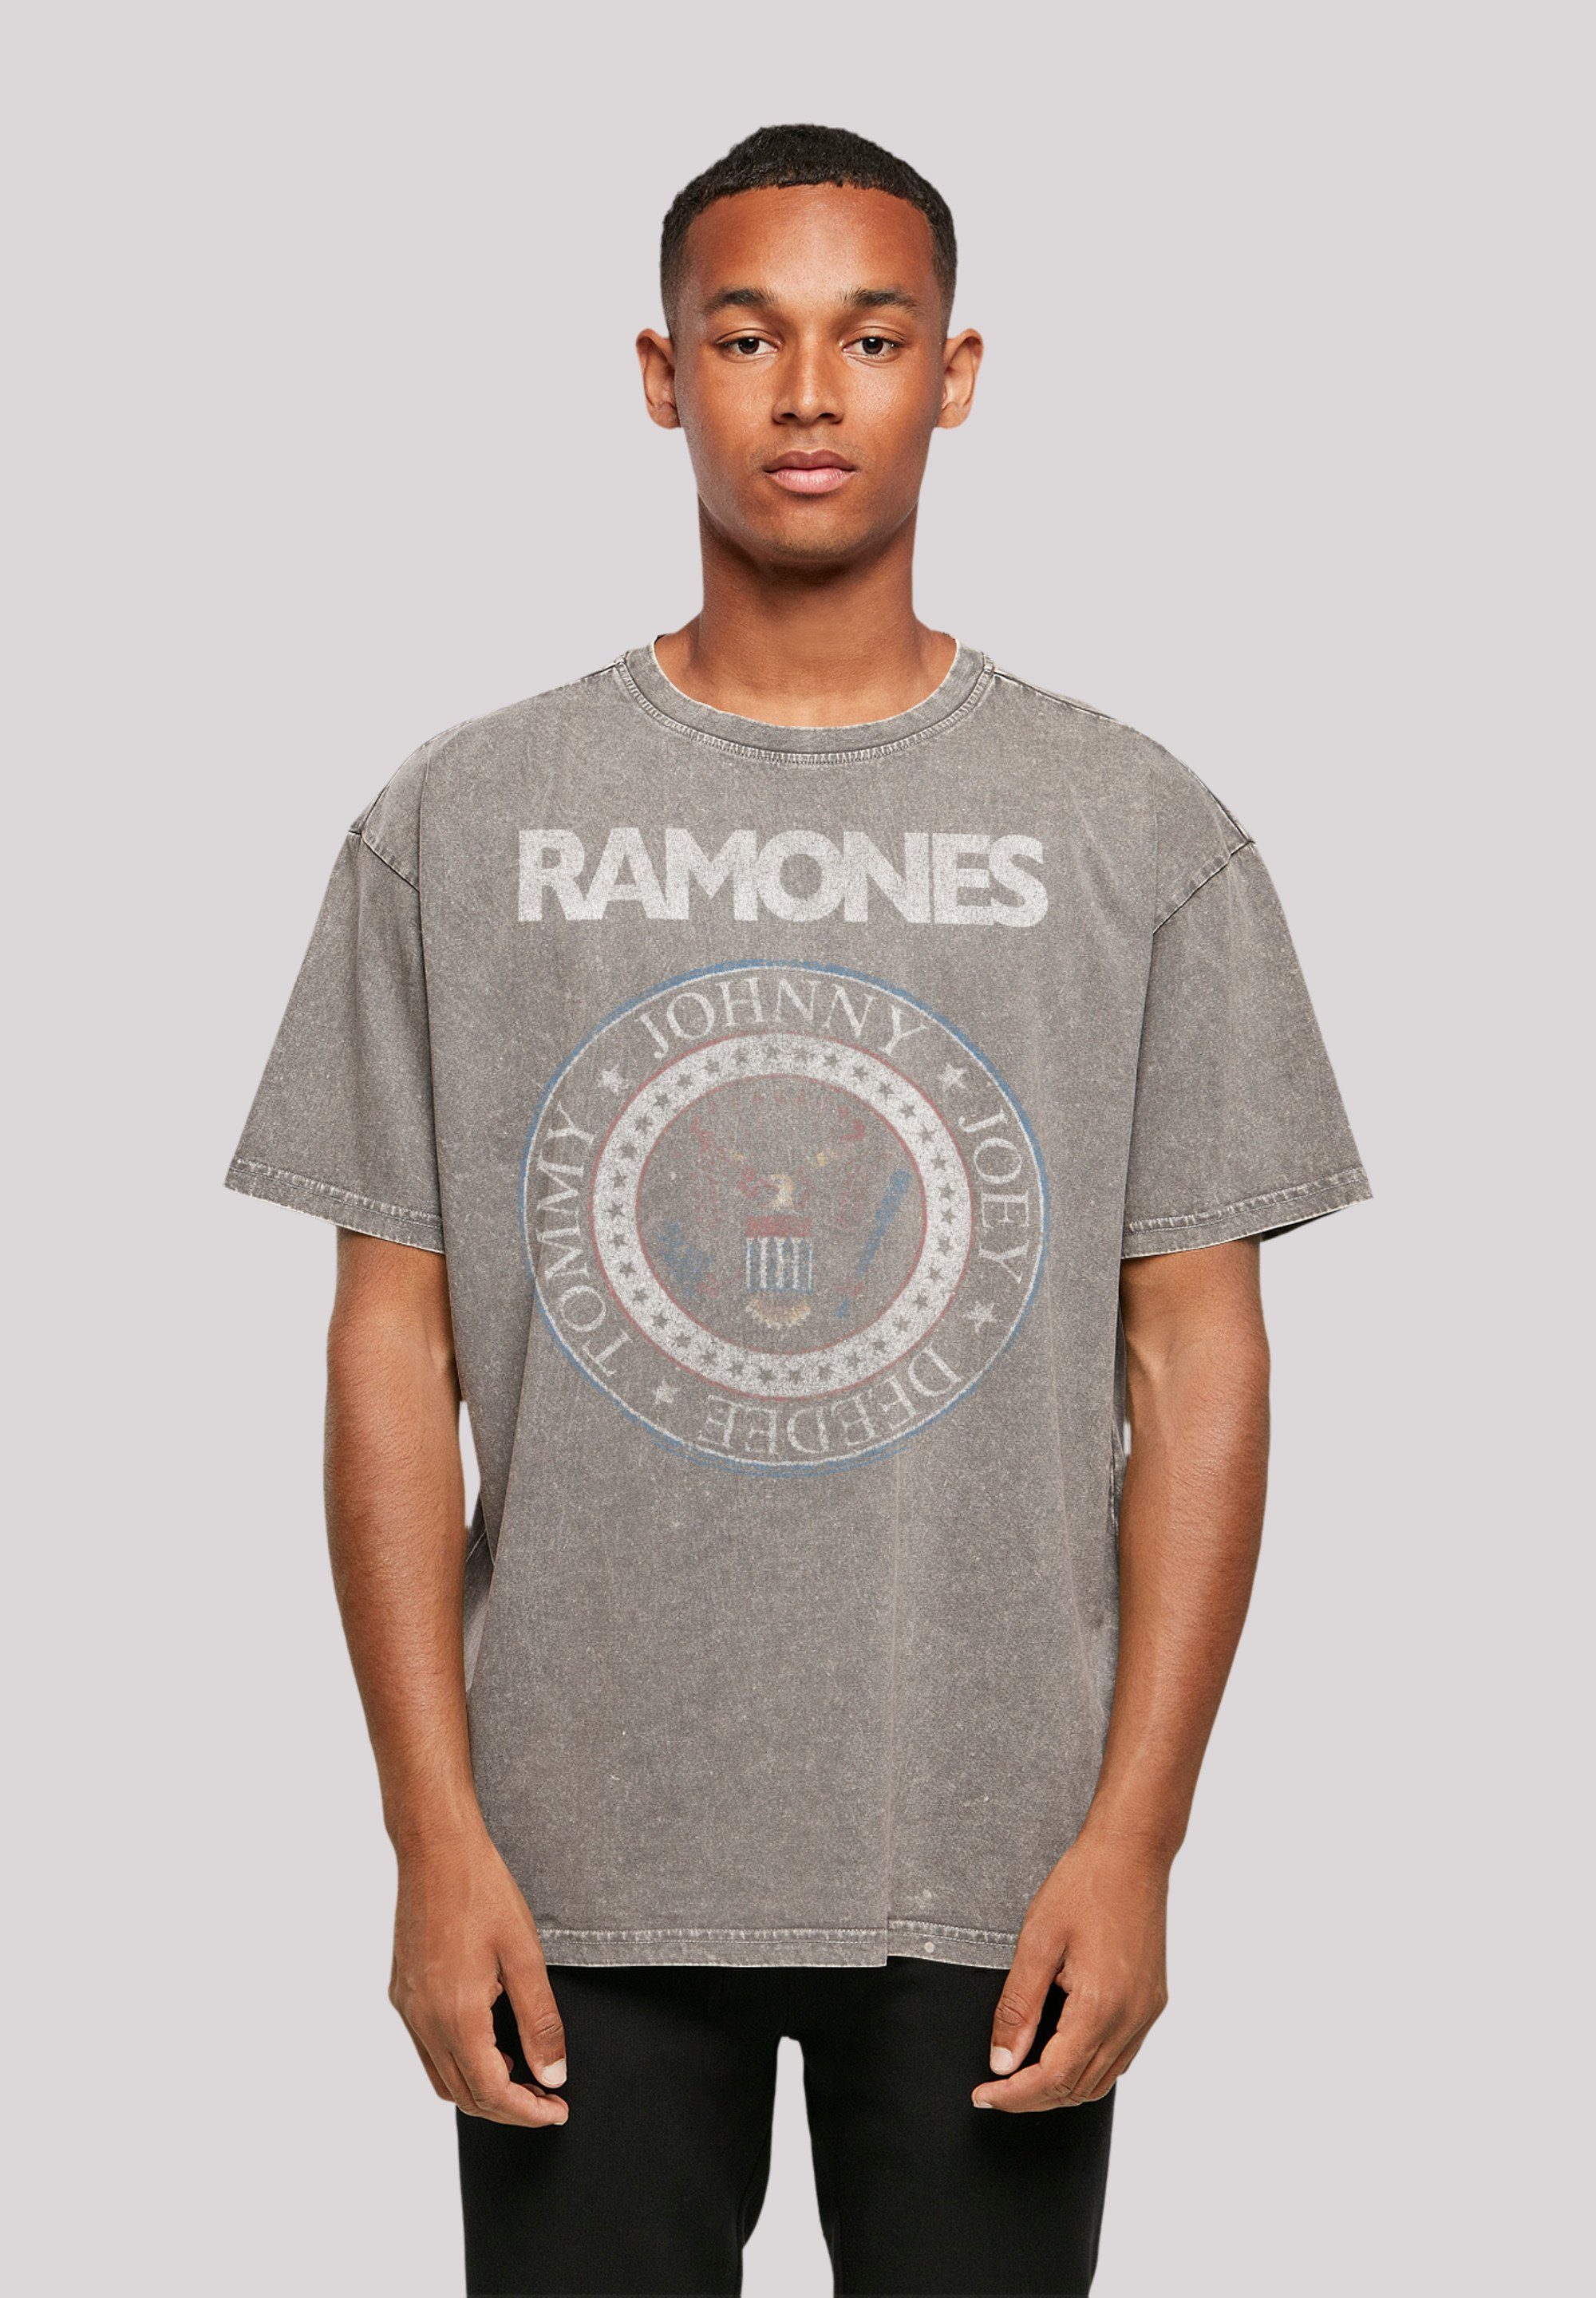 Seal And Rock Musik Asphalt Ramones White F4NT4STIC Premium Band T-Shirt Band, Rock-Musik Qualität, Red